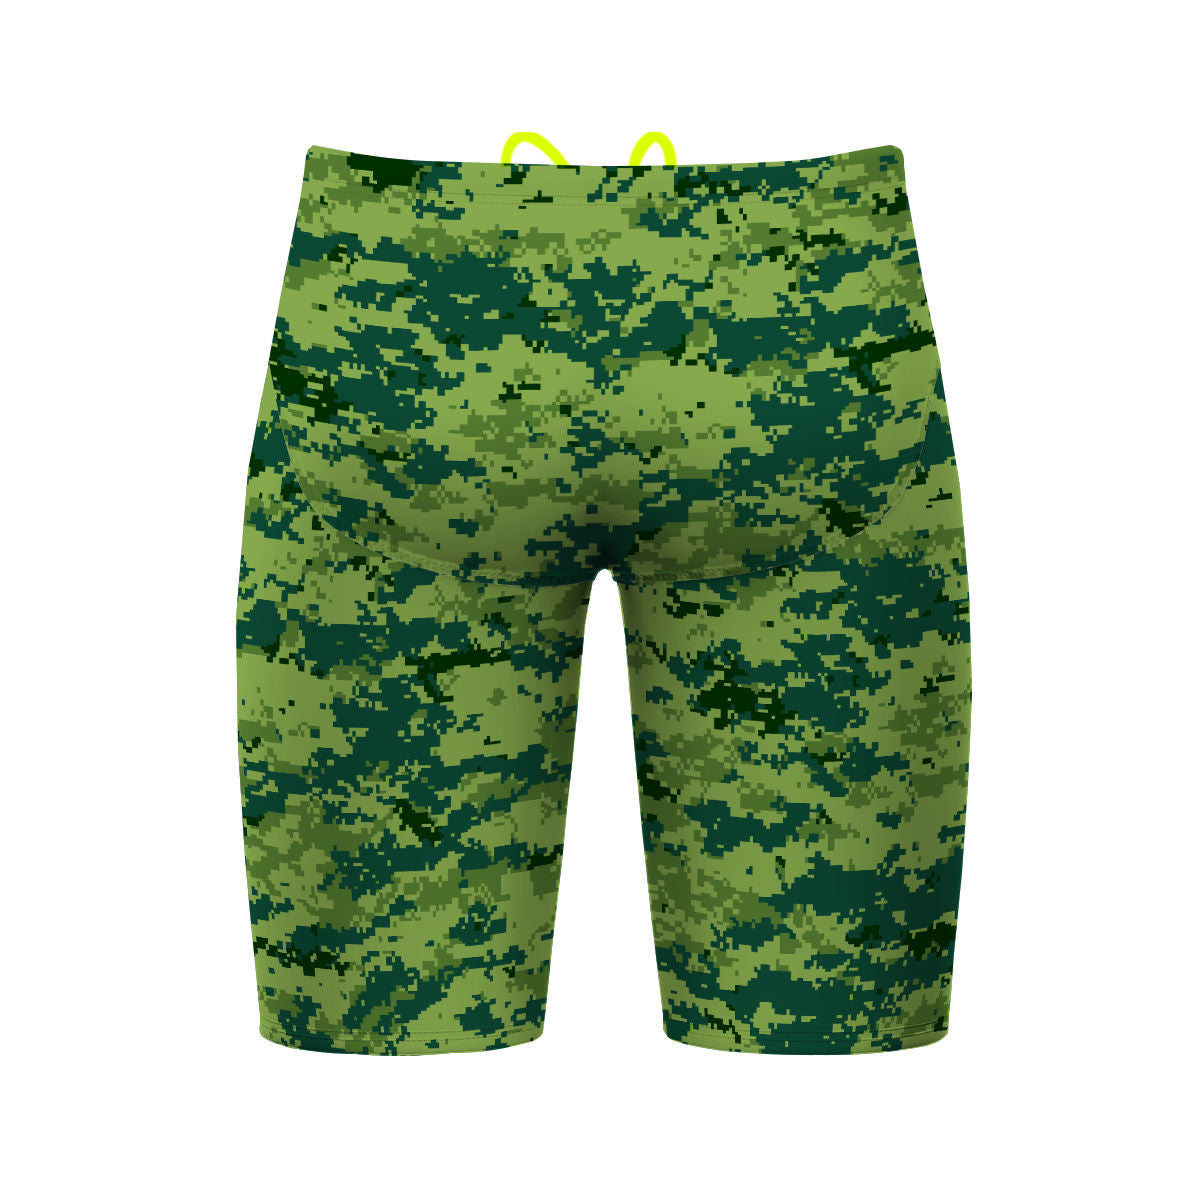 Green Camouflage Atlas Jammer Swimsuit